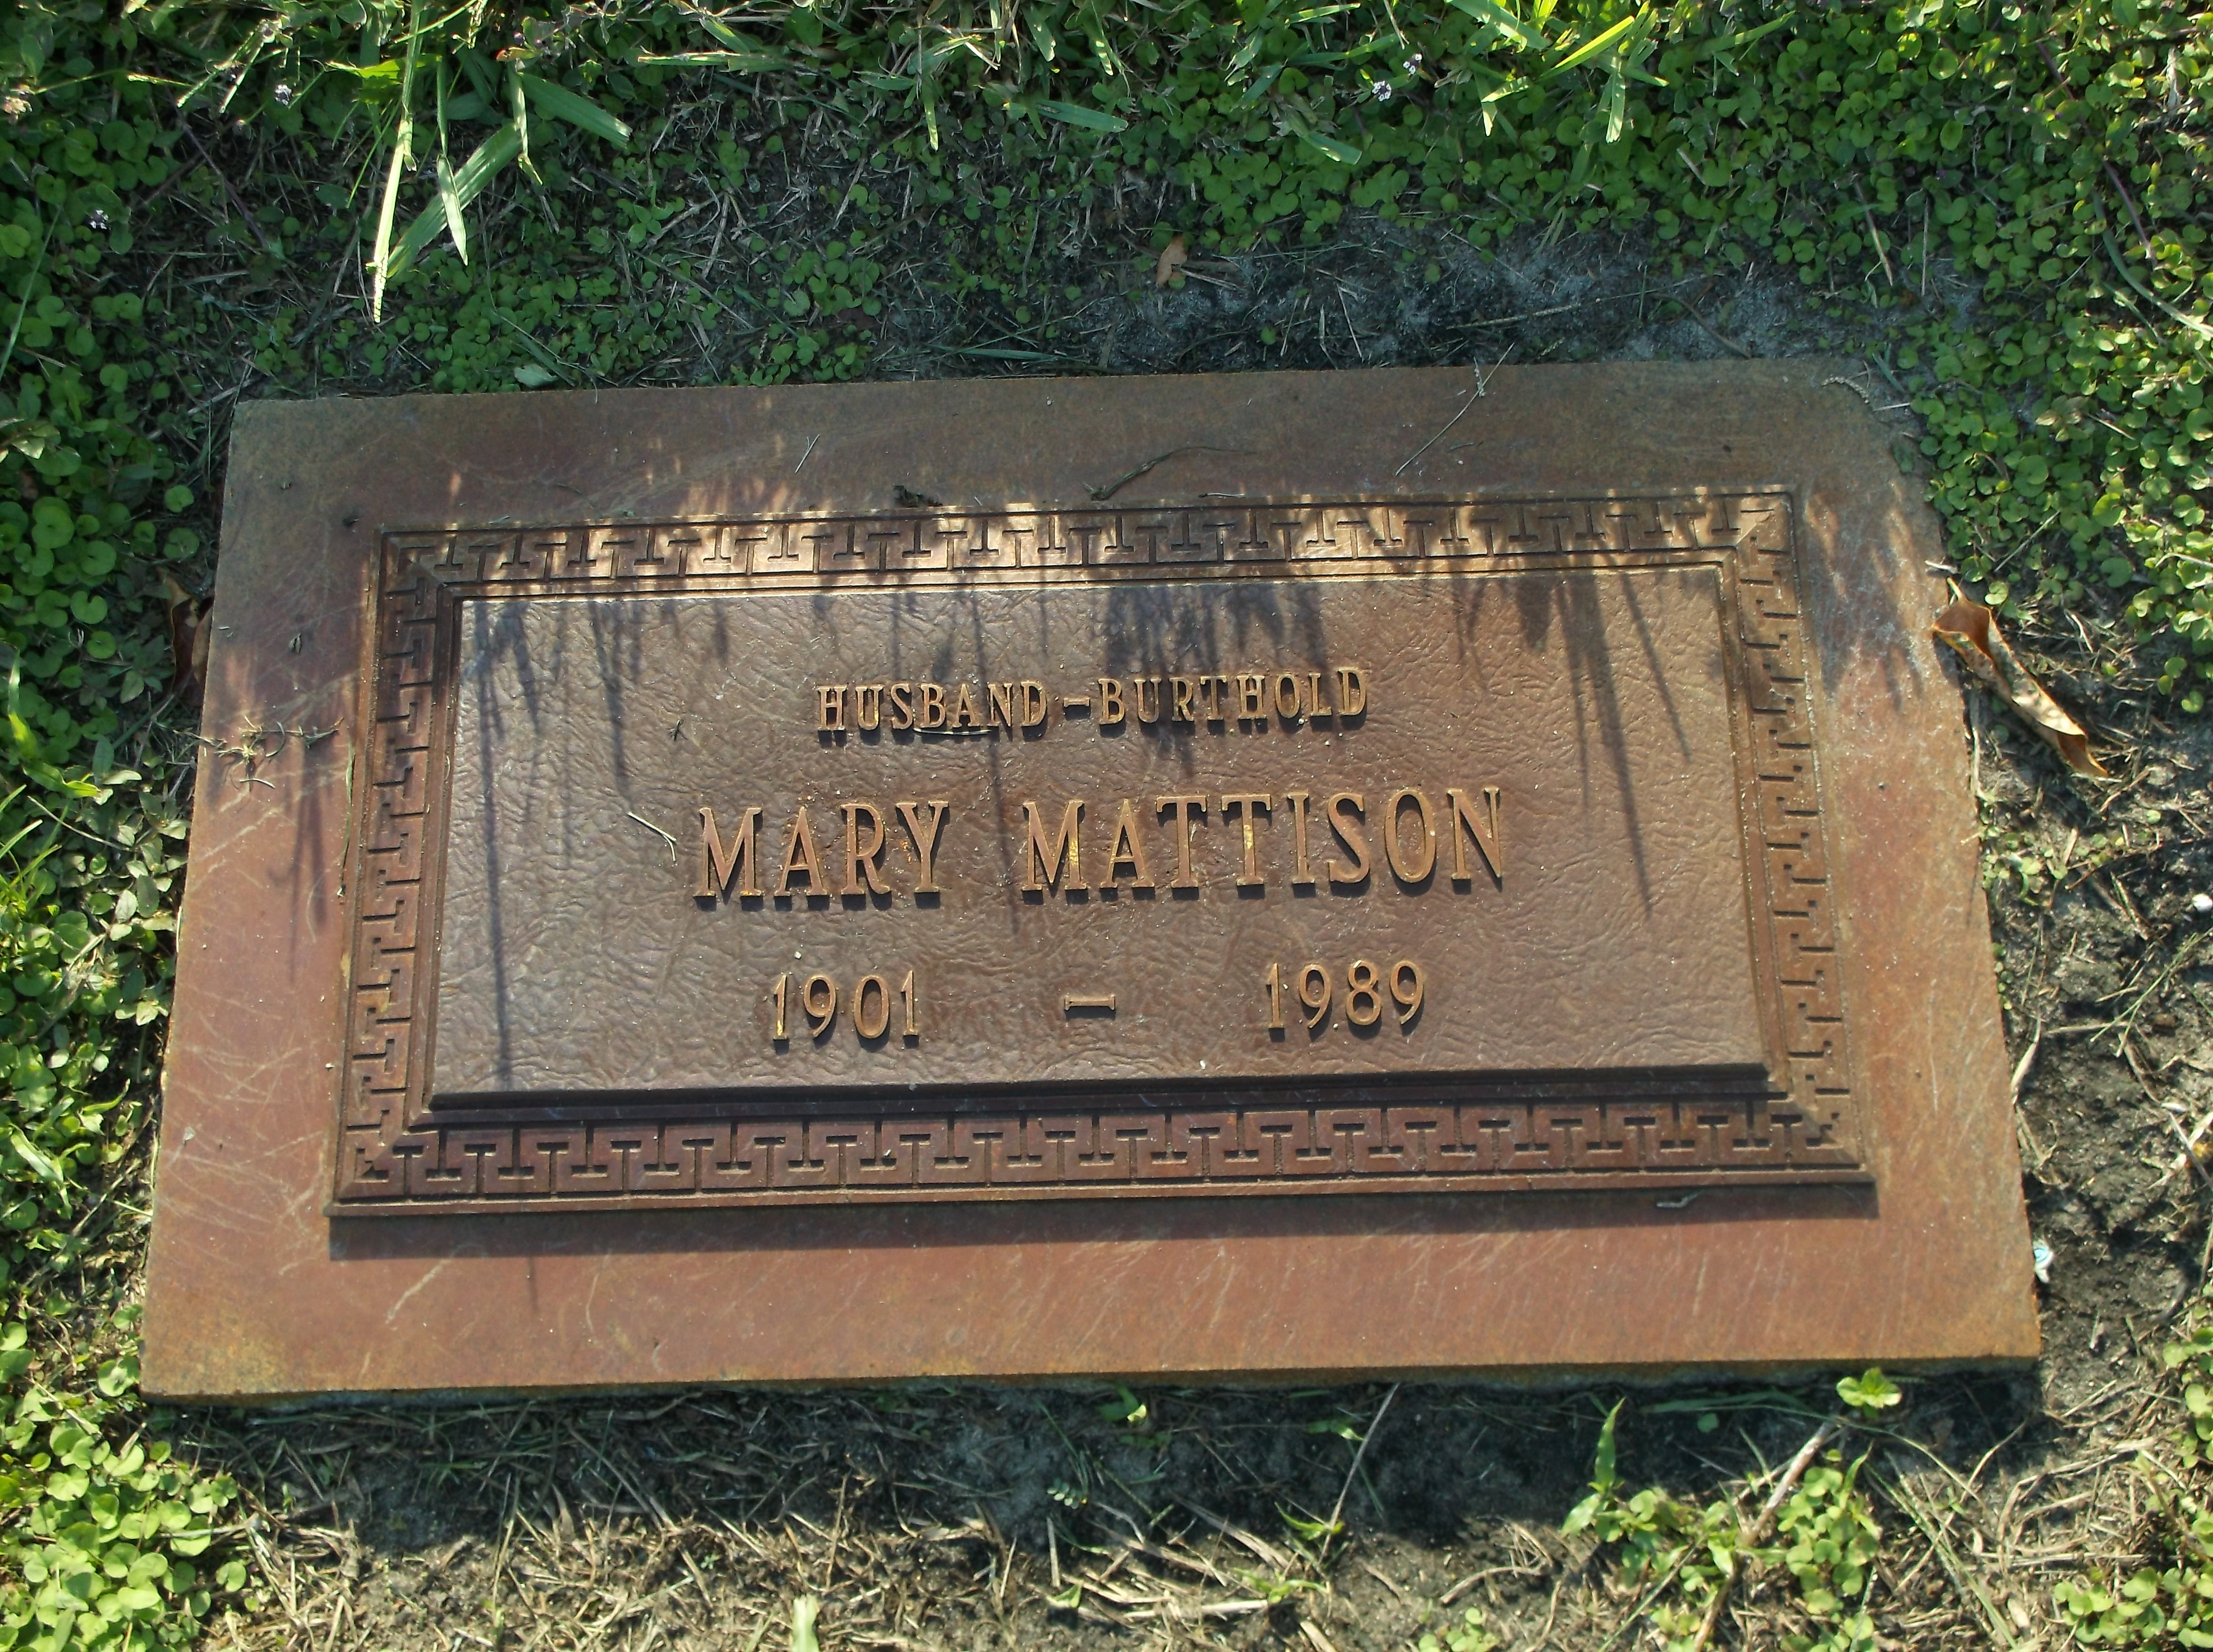 Mary Mattison